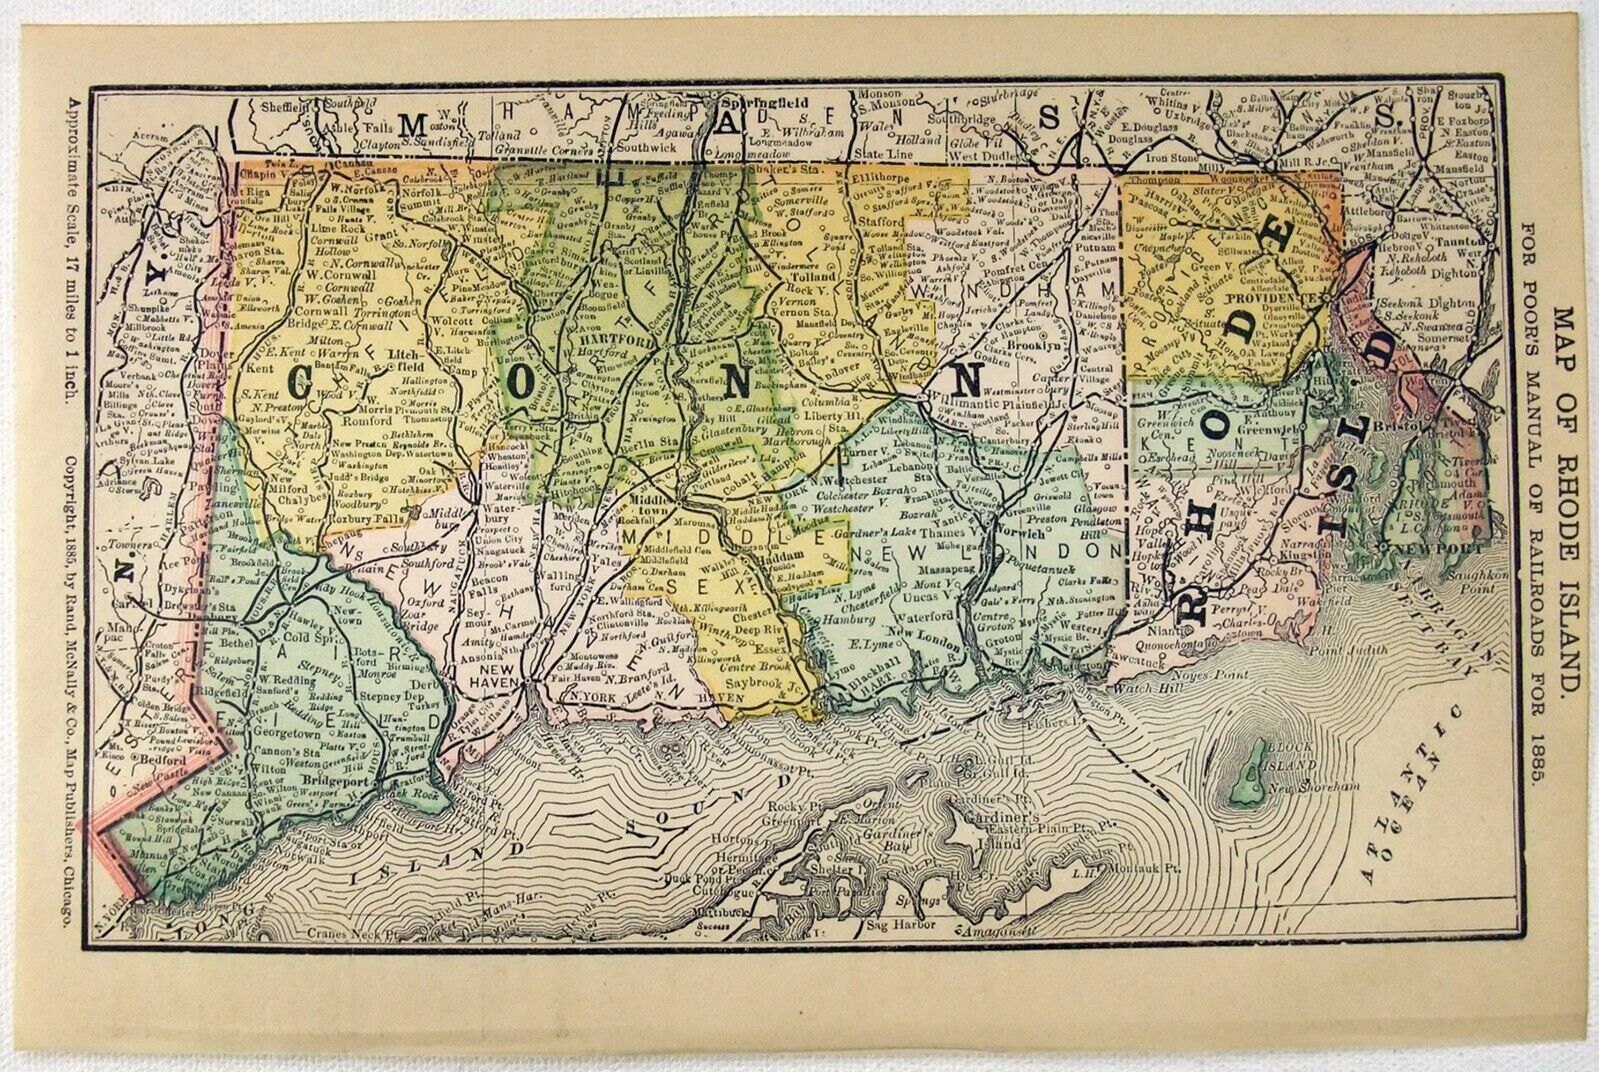 Rhode Island - Original 1885 Railroad Map by Rand McNally. Antique